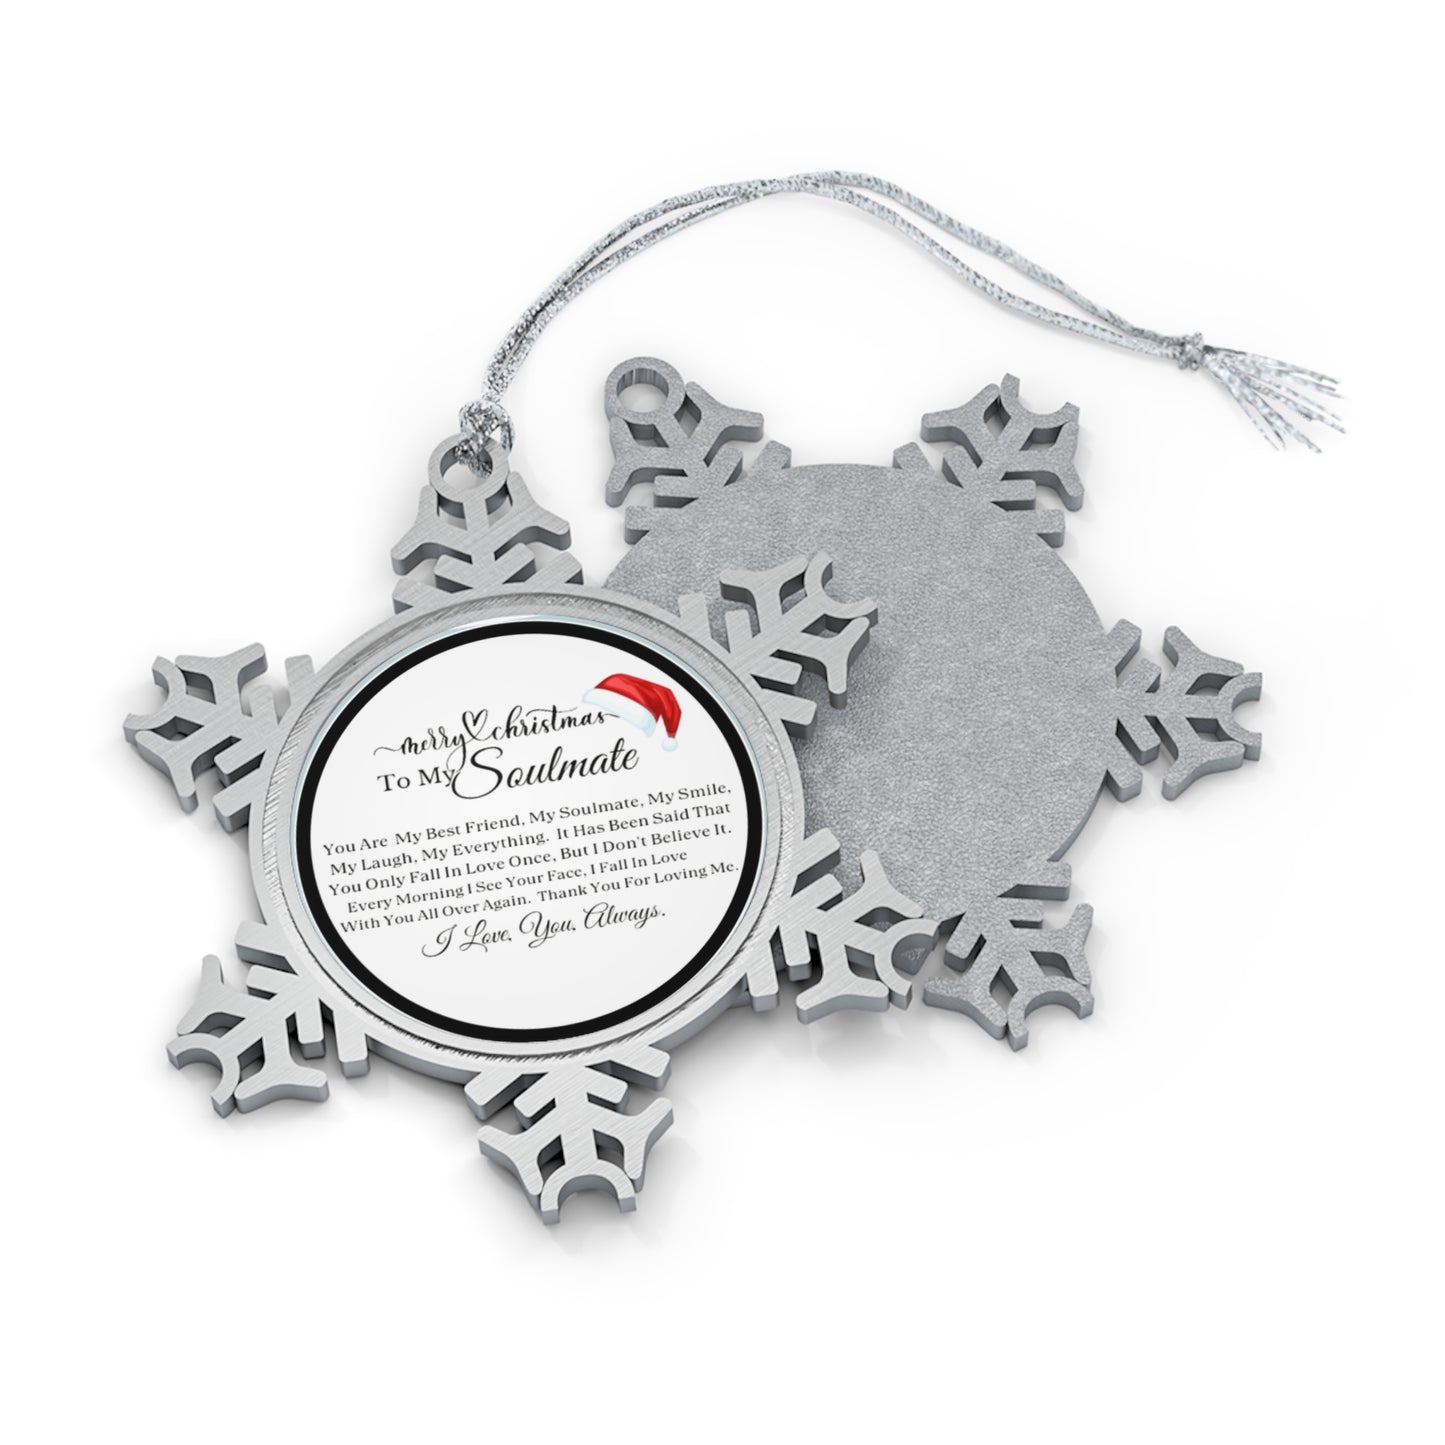 Merry Christmas Soulmate Black Pewter Snowflake Ornament